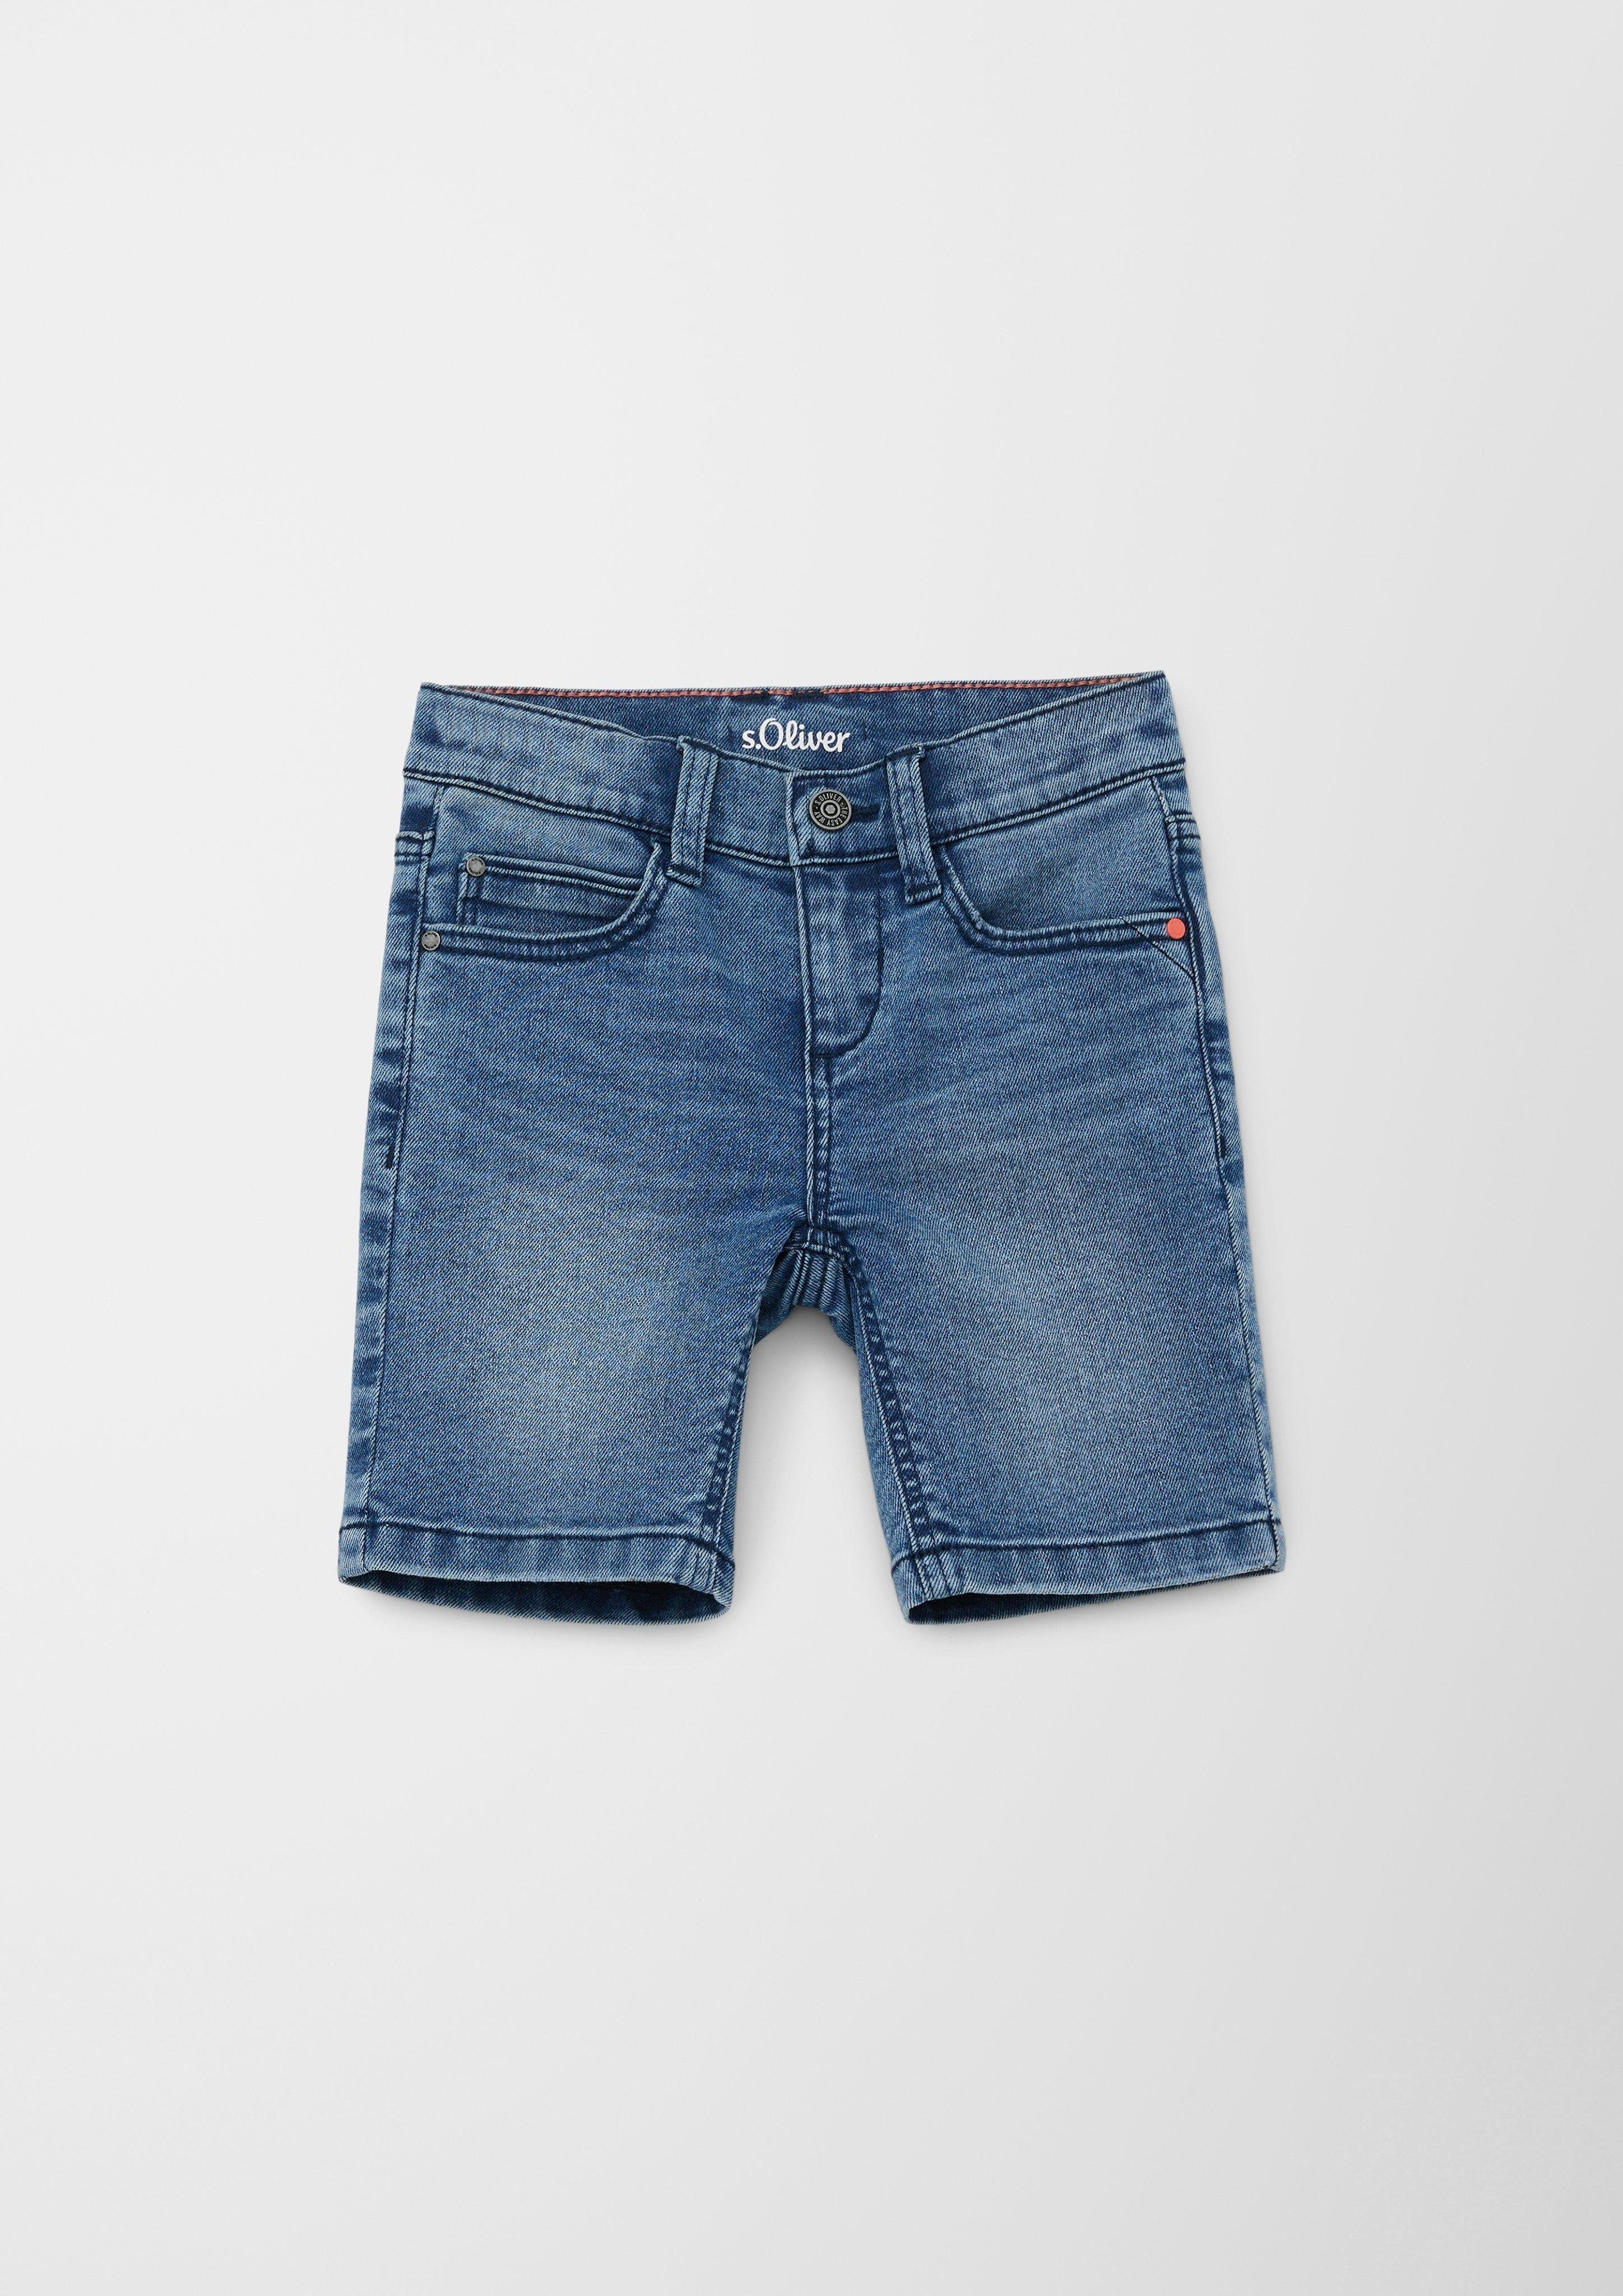 Mid Waschung Fit Leg Slim Brad / Jeansshorts s.Oliver / / Jeans-Bermuda Slim Rise